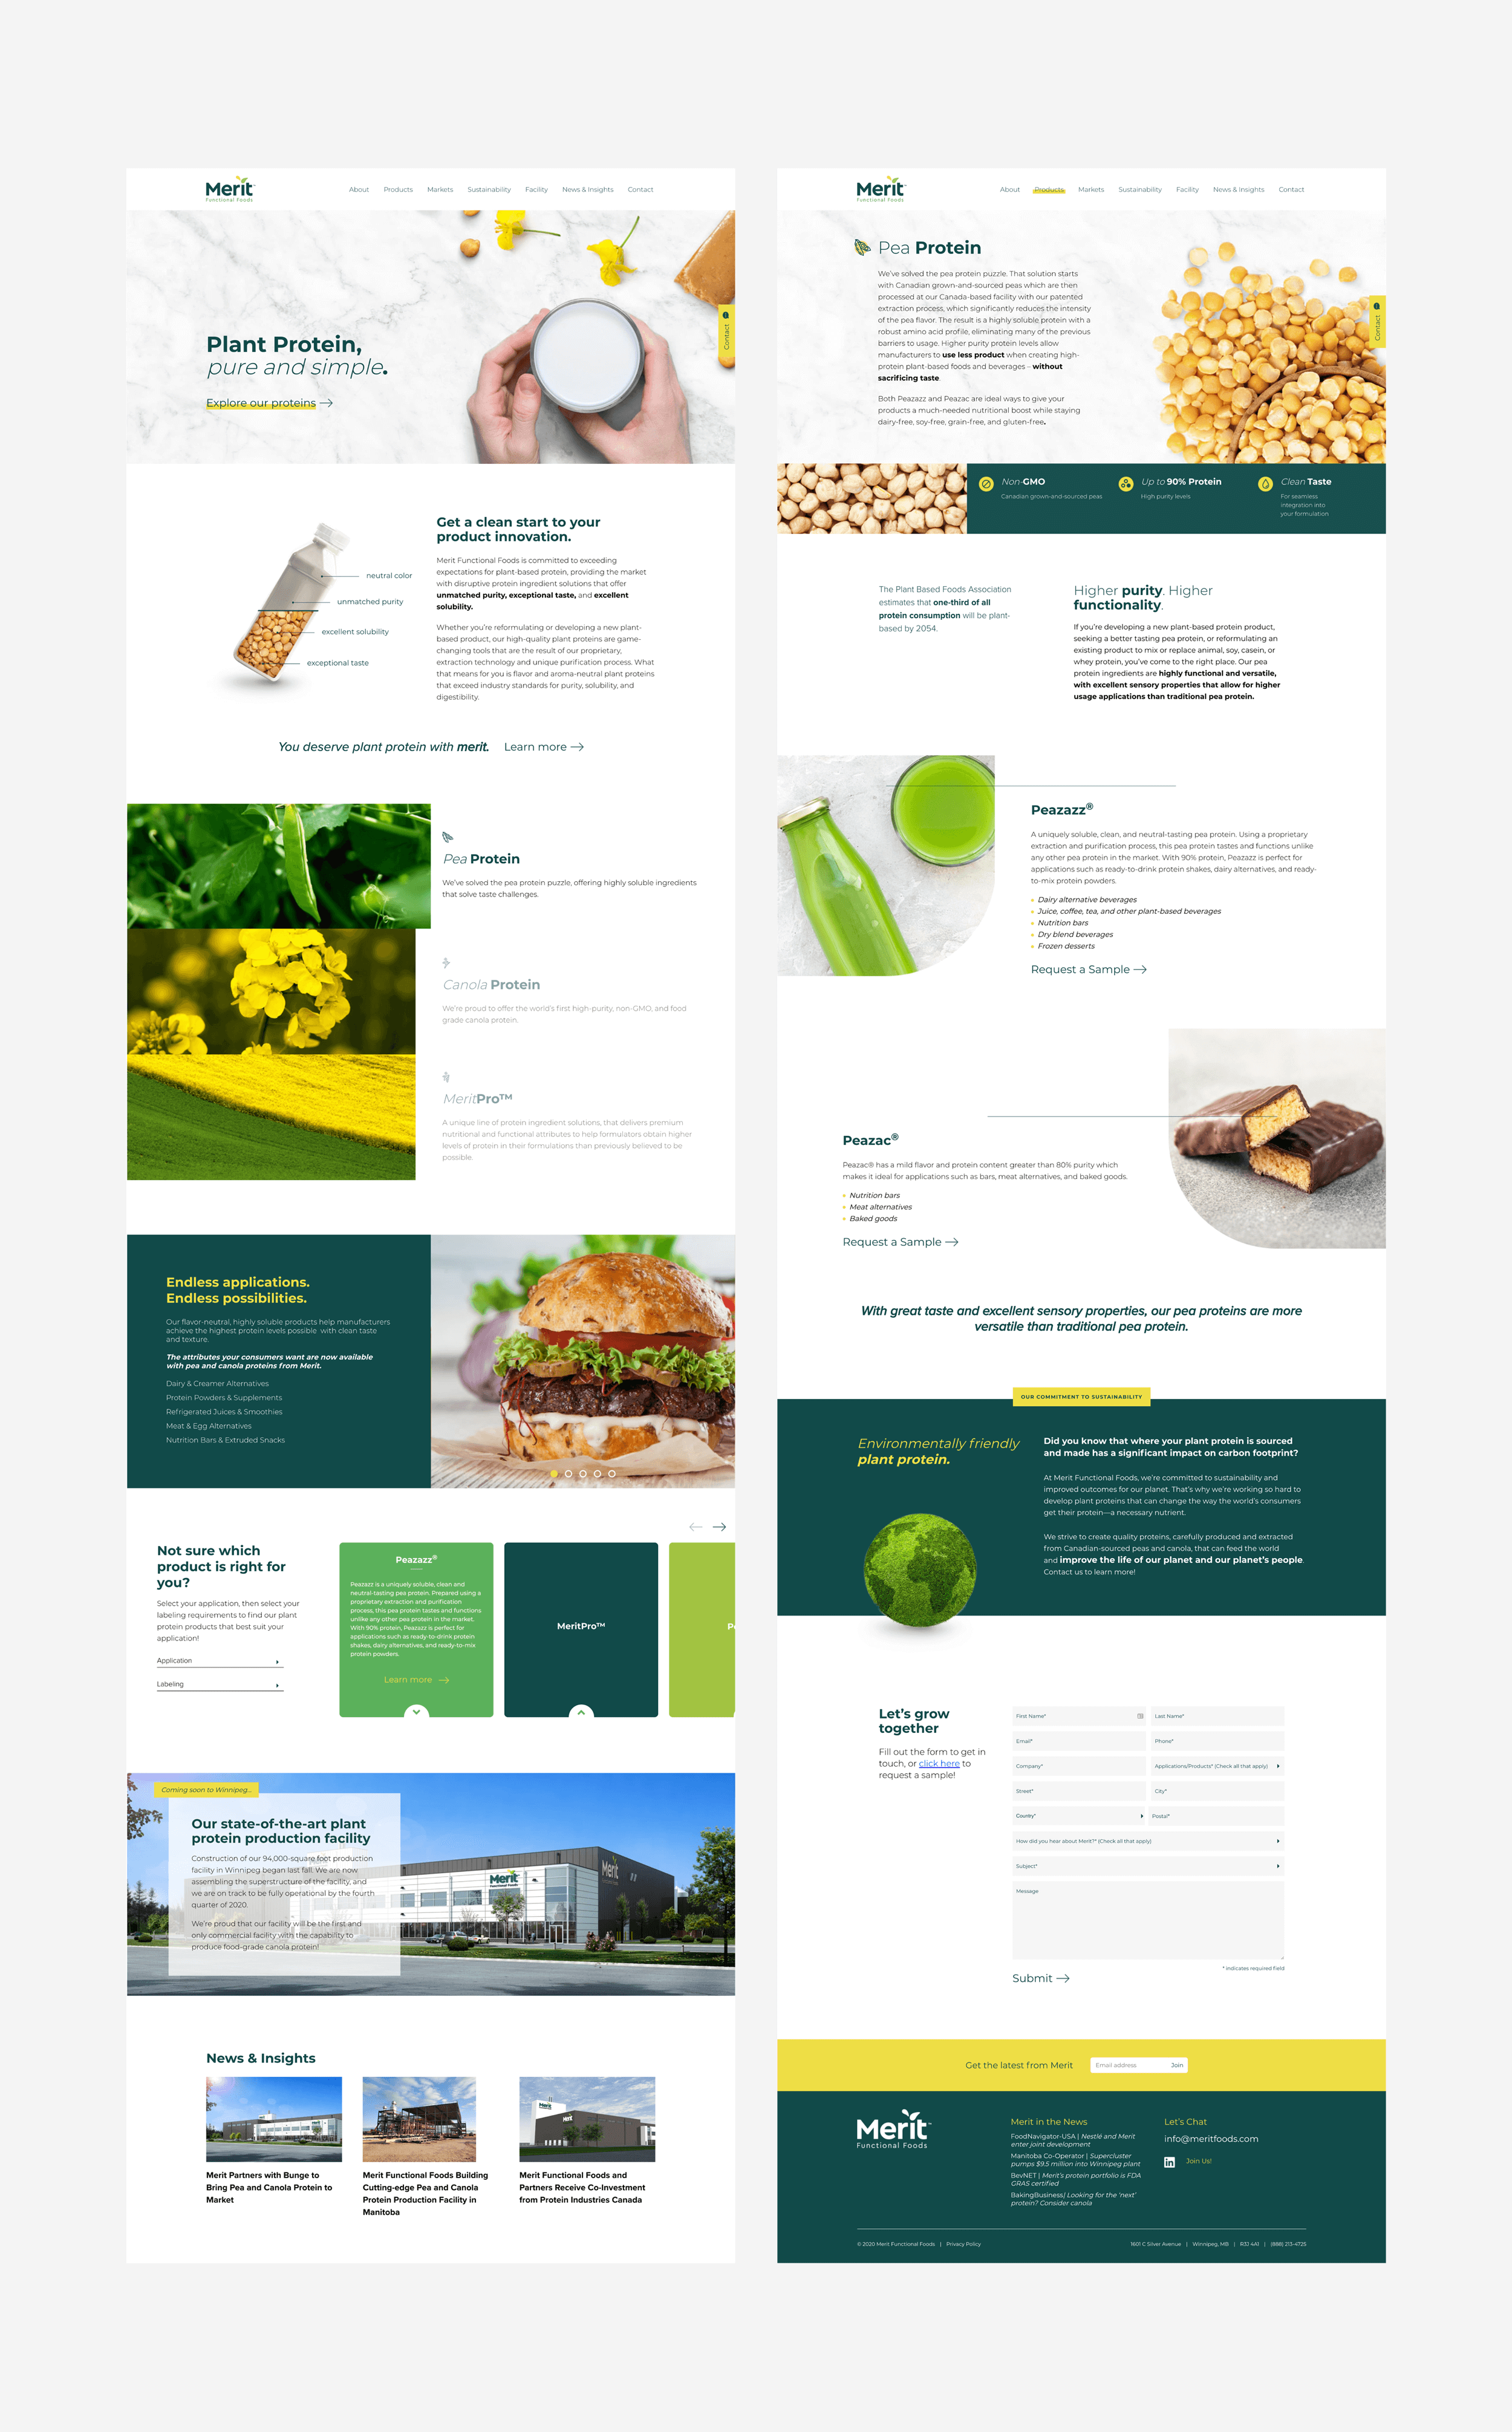 Merit Functional Foods Website